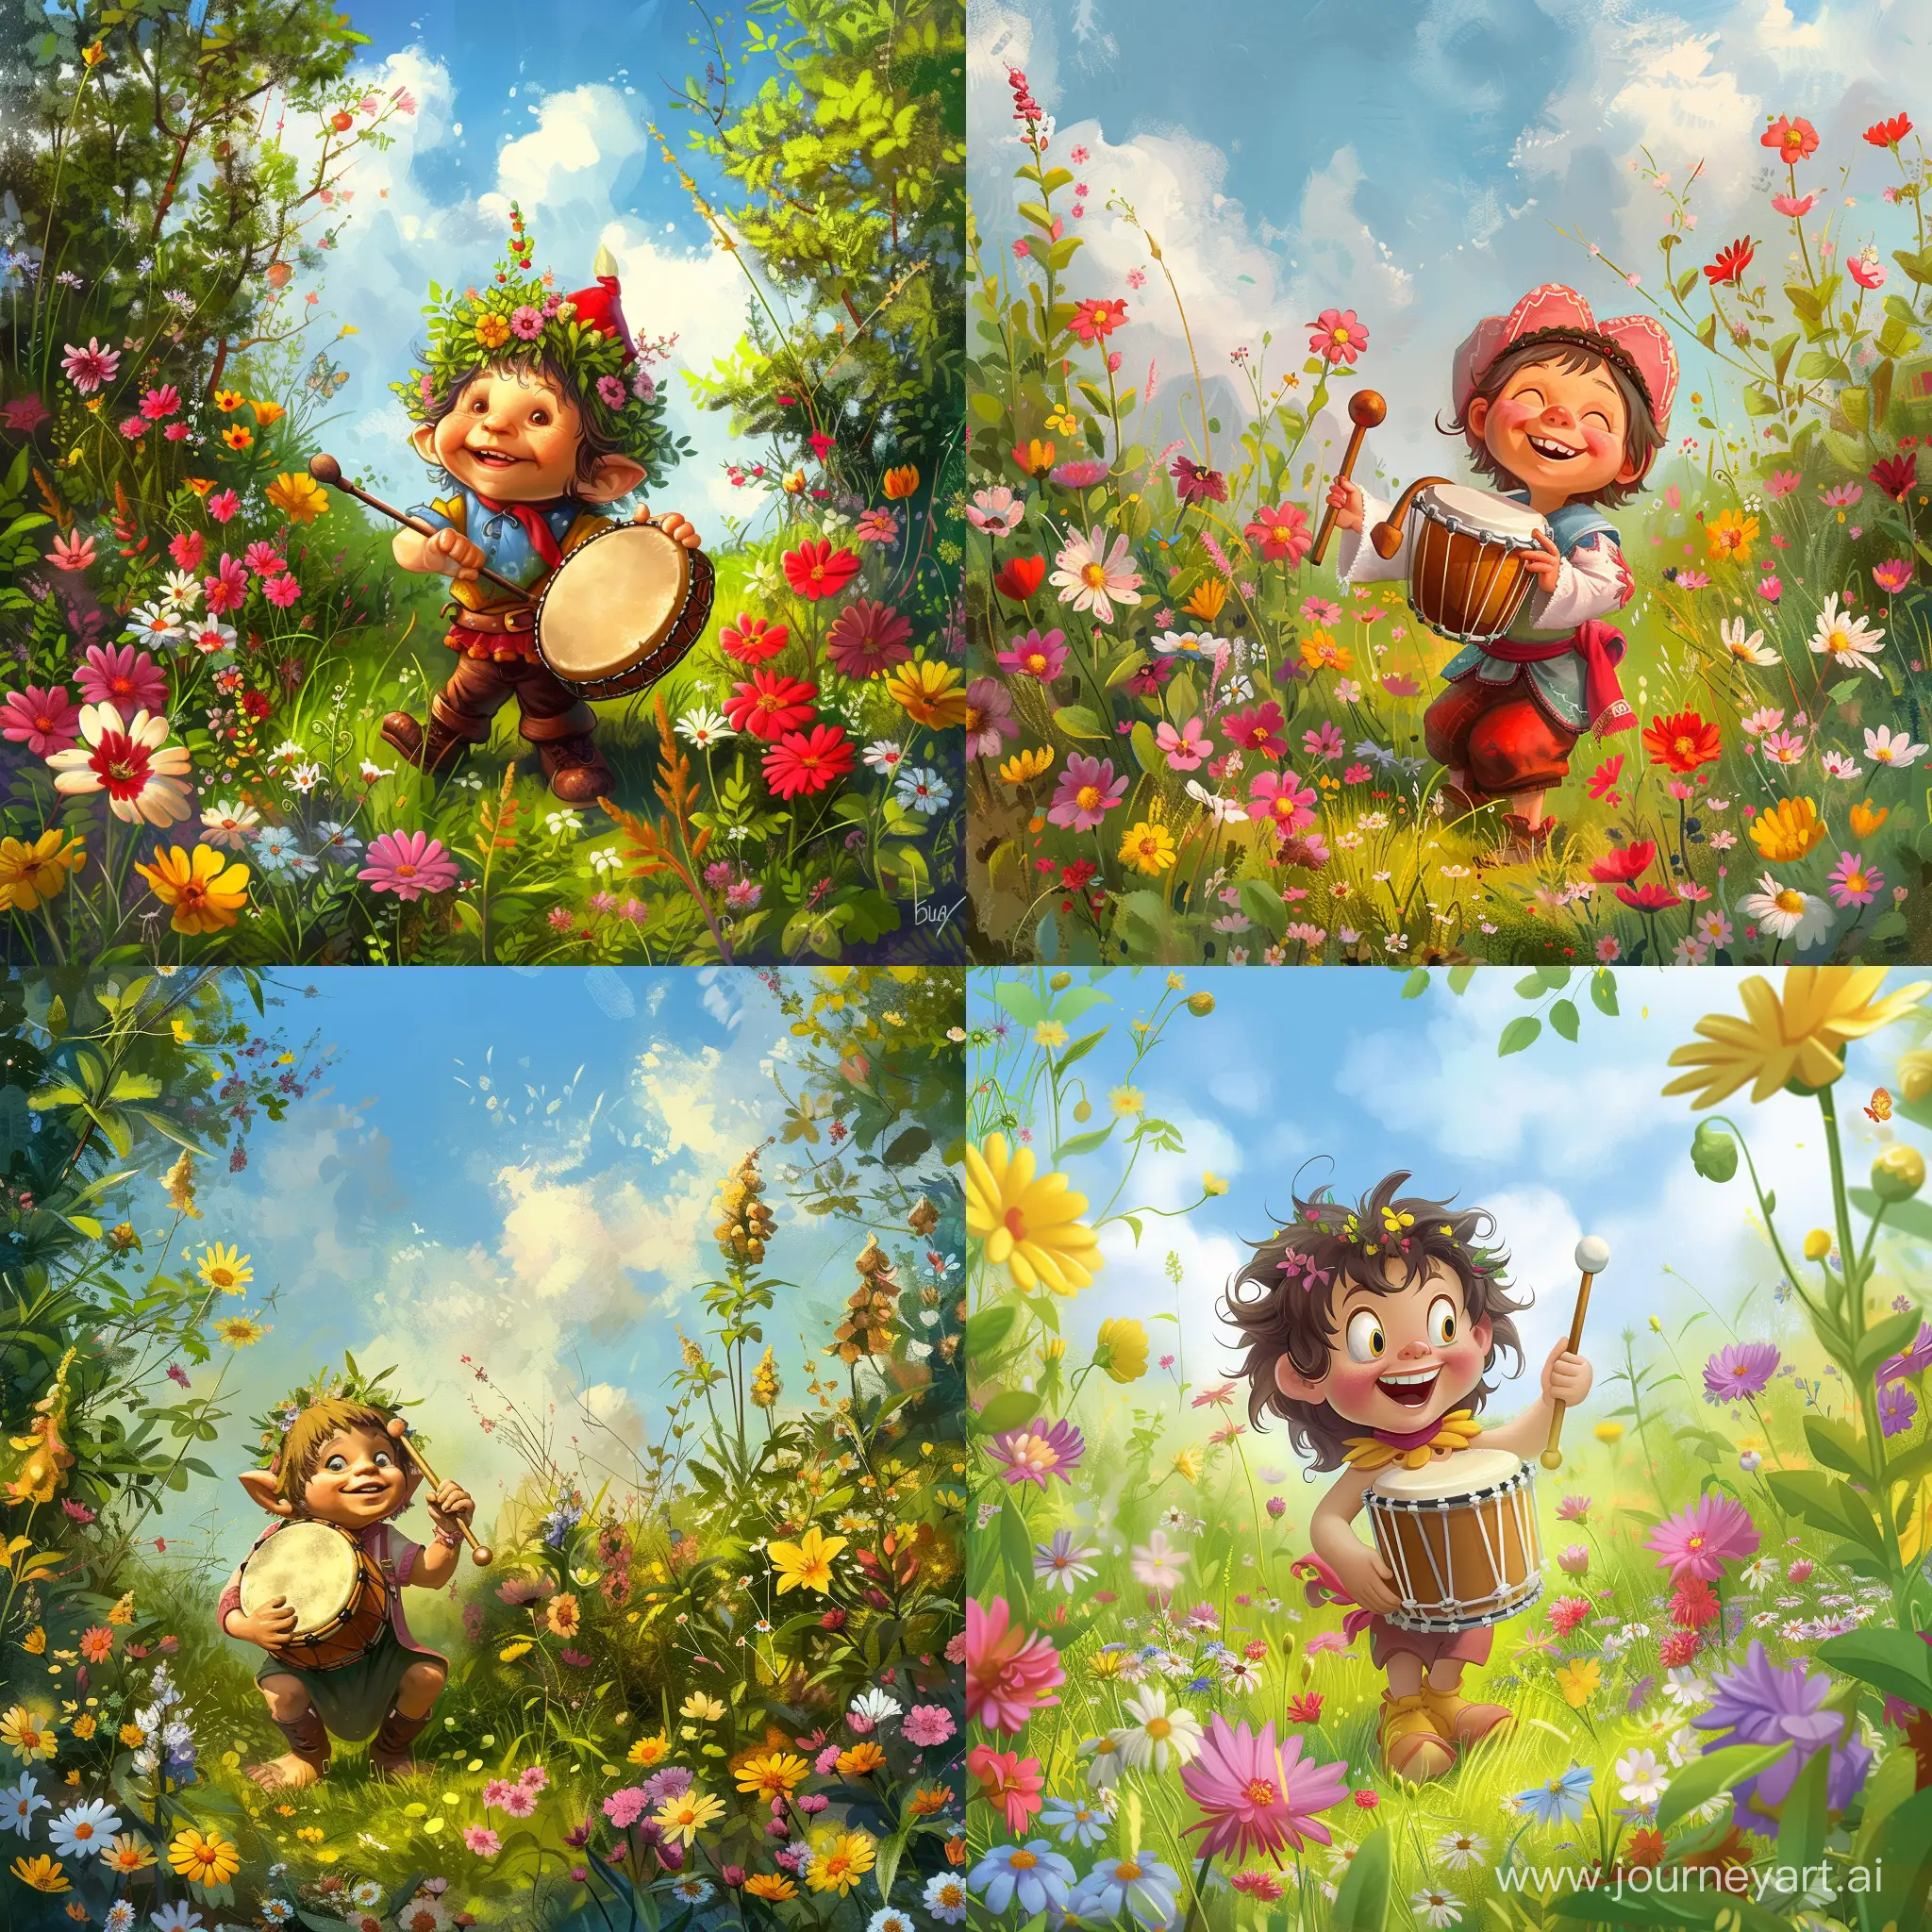 Cartoonish-Fairytale-Character-Buba-Playing-Drum-on-Flowering-Meadow